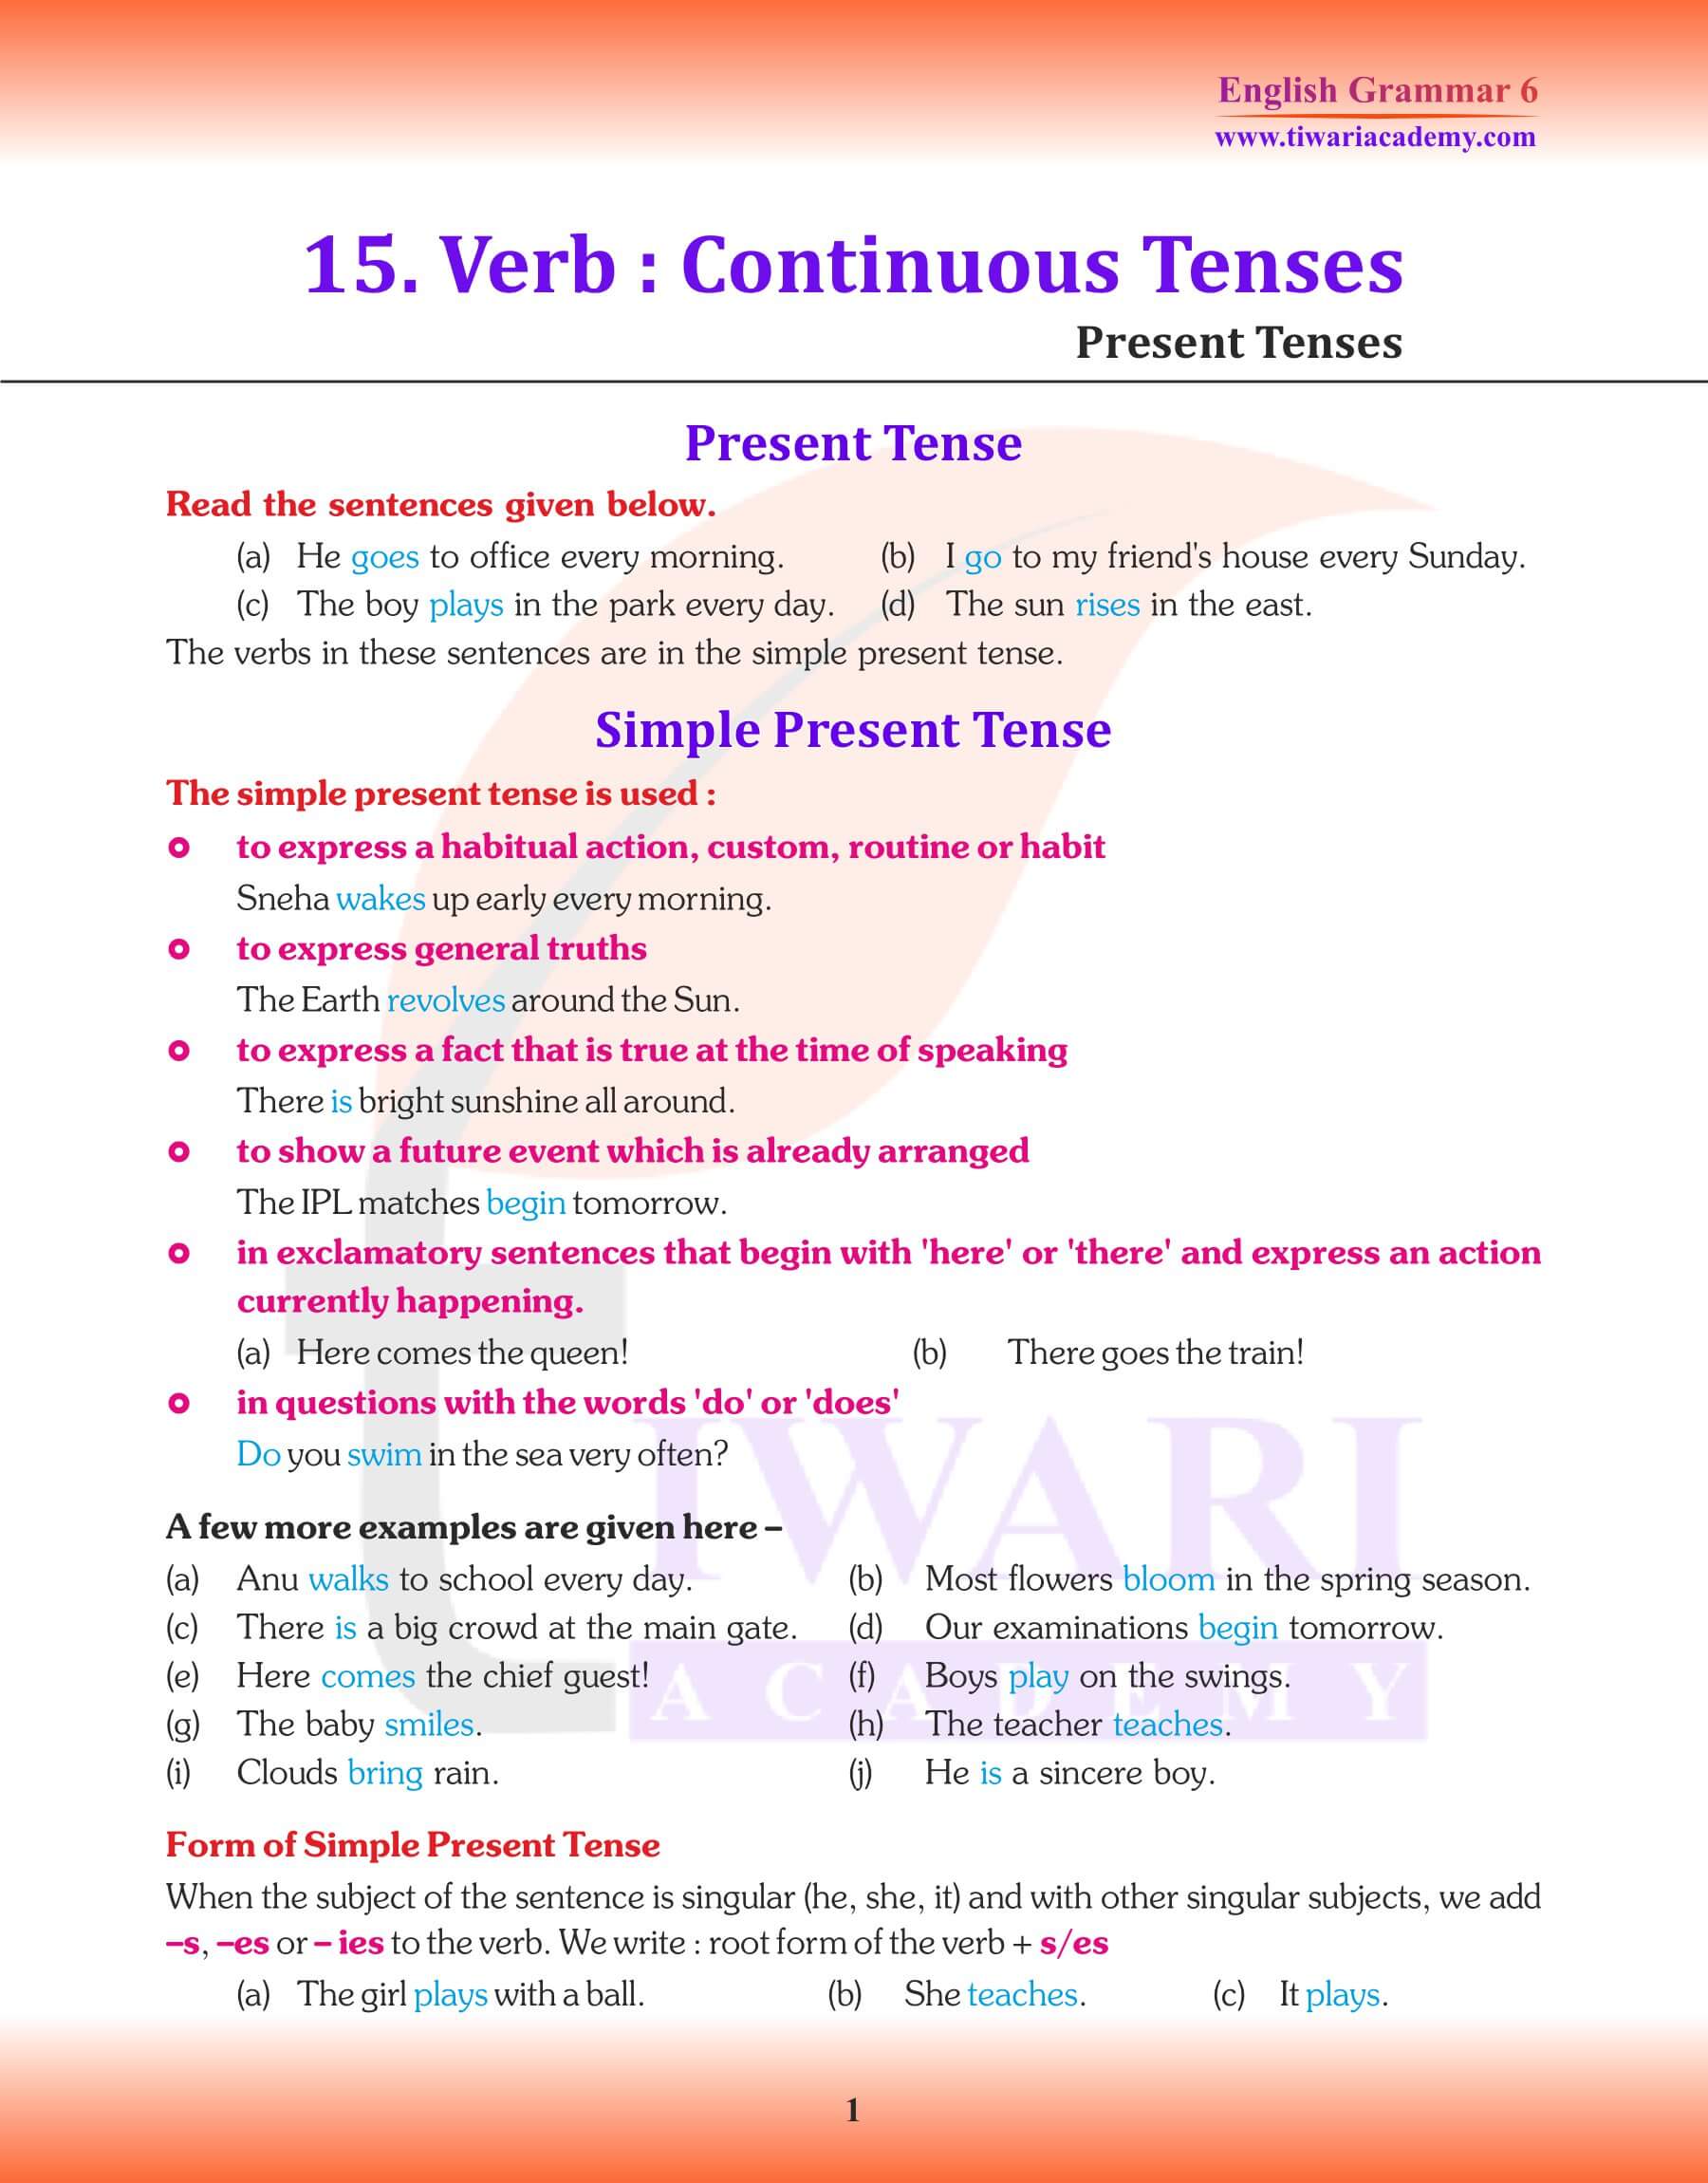 Class 6 Grammar Verbs Continuous Tenses